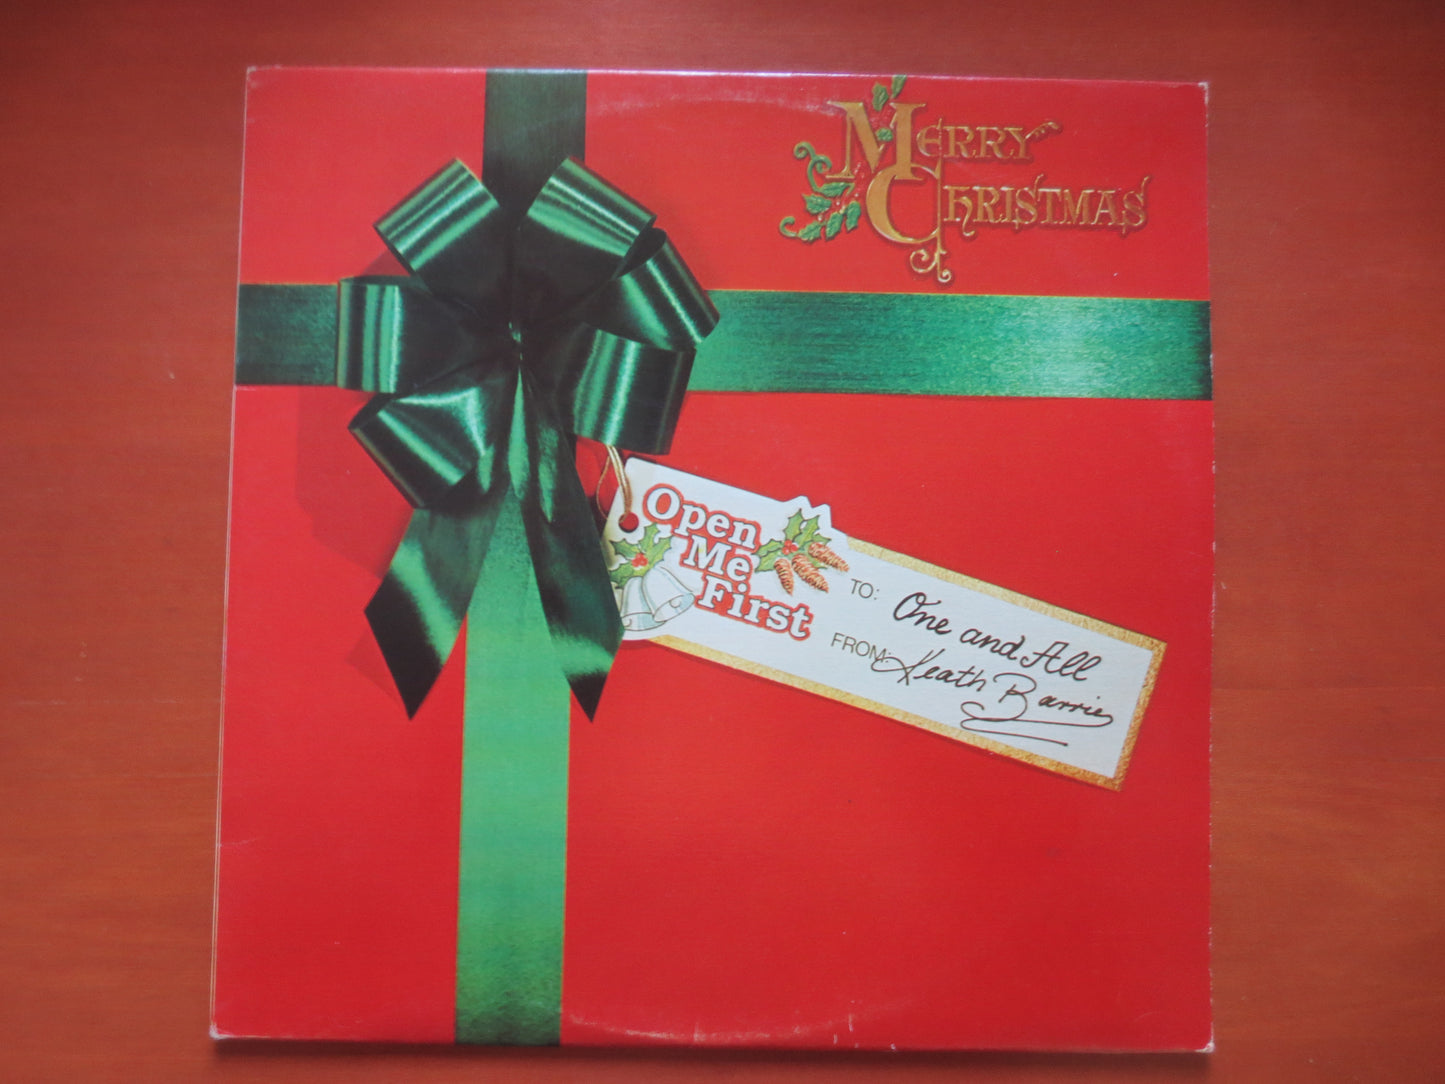 KEATH BARRIE, Merry CHRISTMAS, Keath Barrie Album, Keath Barrie Vinyl, Keath Barrie Lp, Keath Barrie Record, 1980 Record